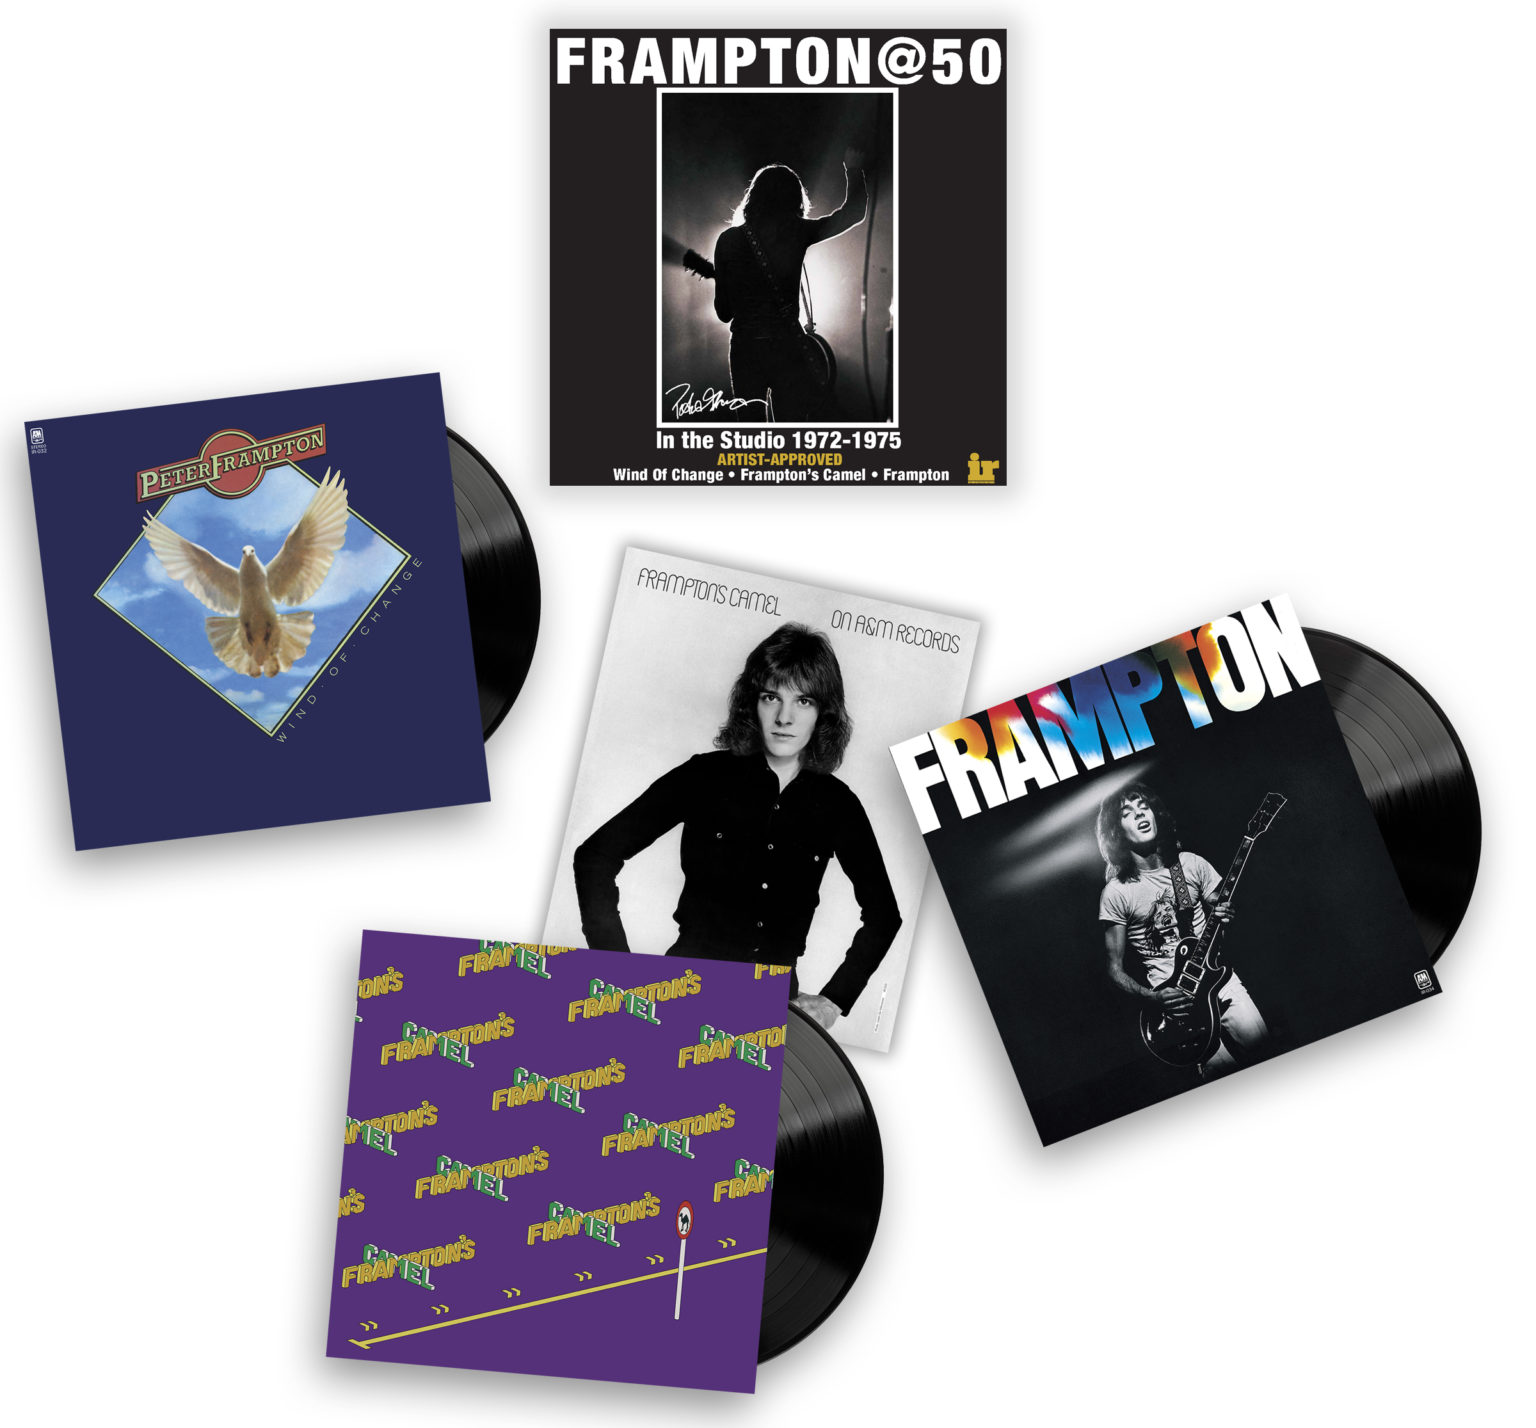 Intervention Records Frampton@50 box set